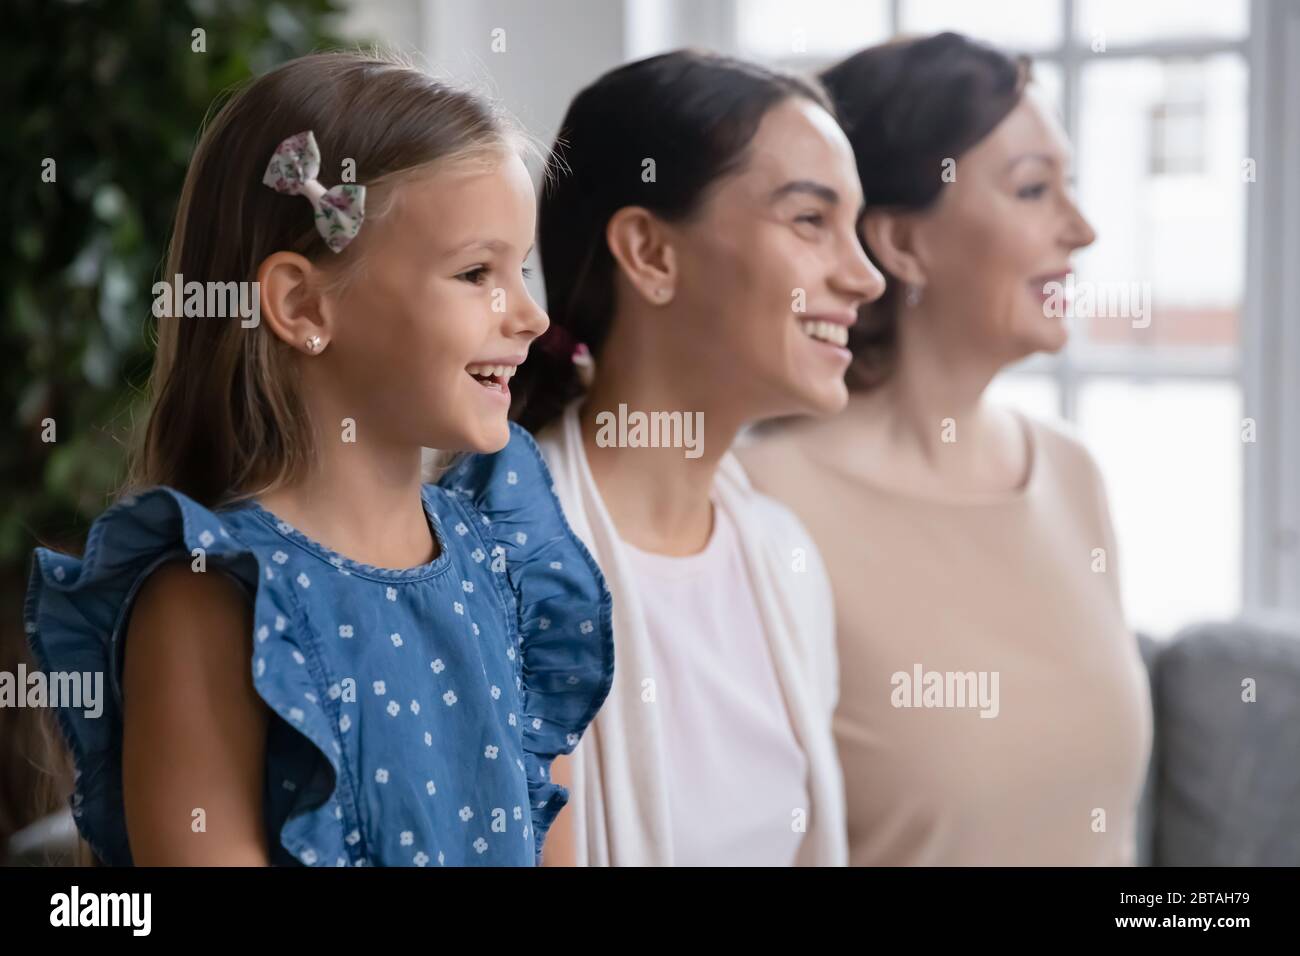 Profile view of happy three generations of women posing Stock Photo